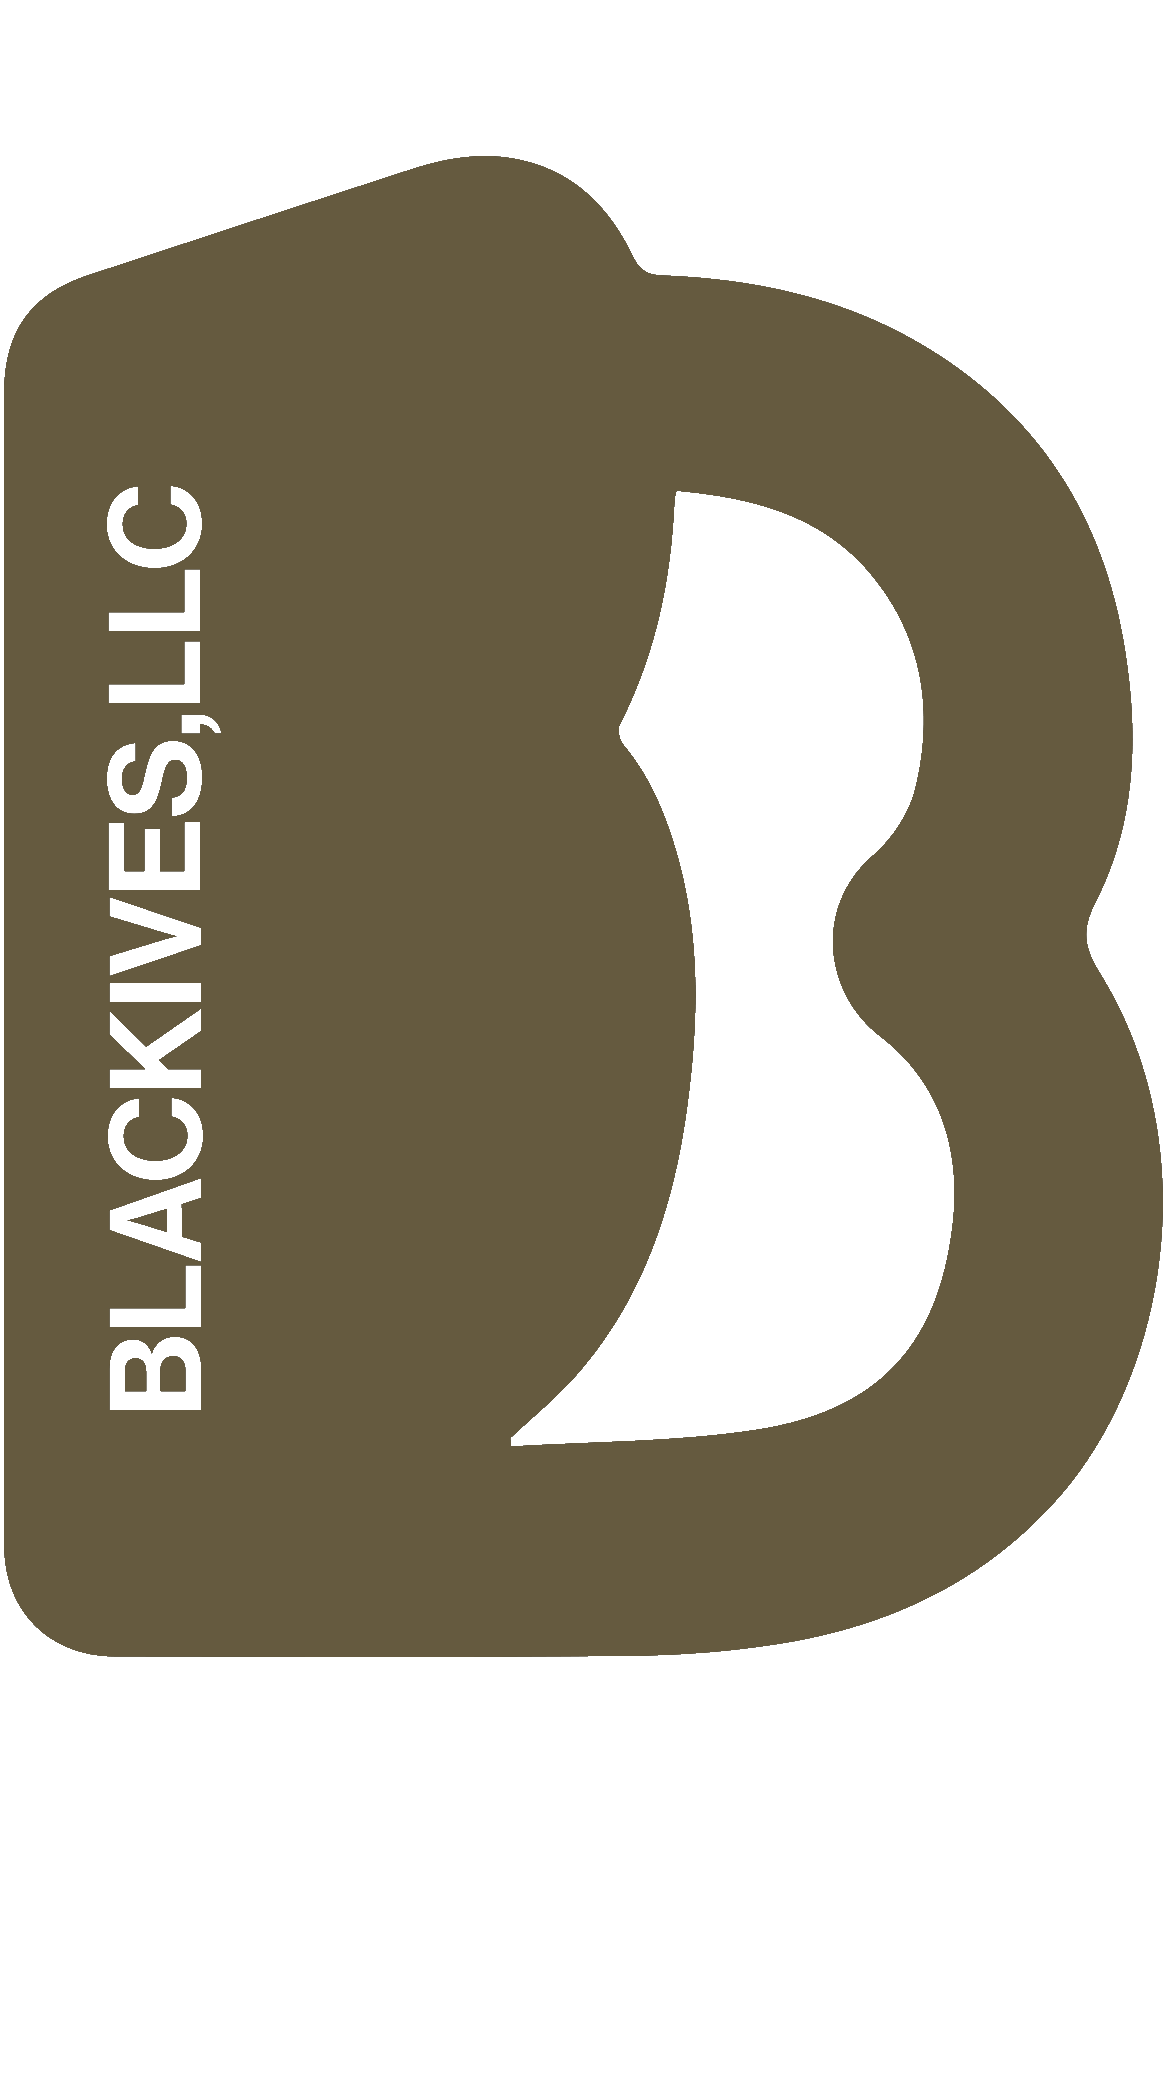 Blackives, LLC